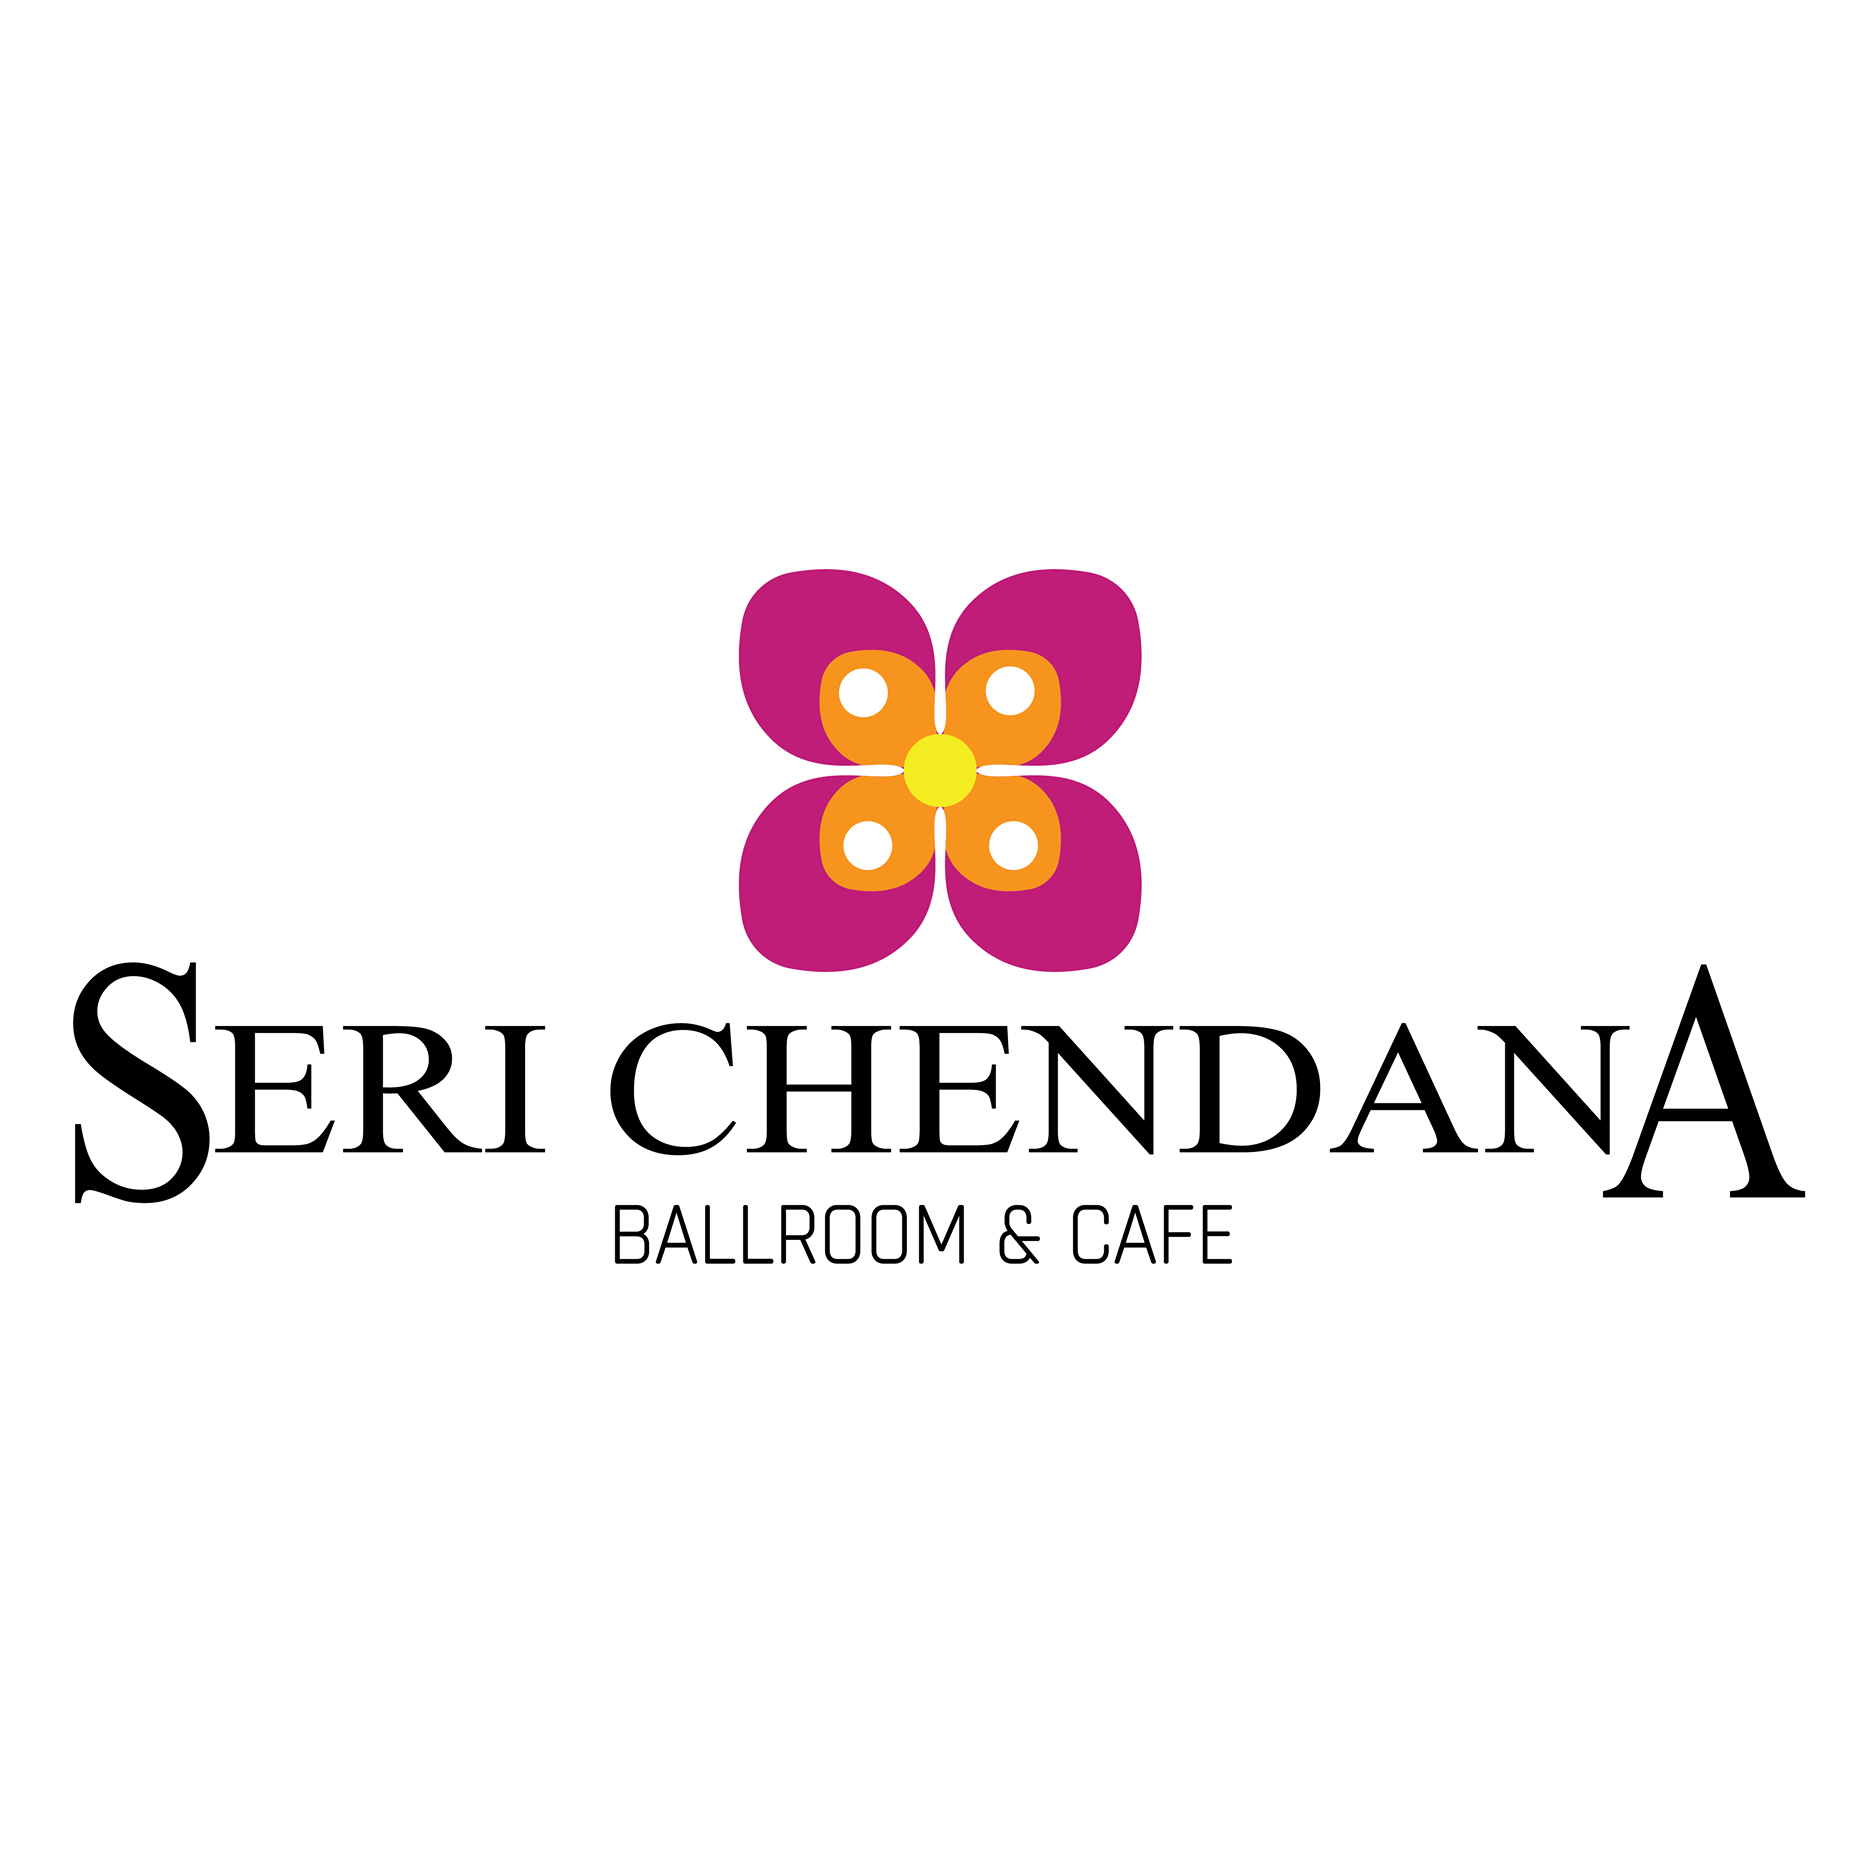 Seri Chendana Ballroom & Cafe logo